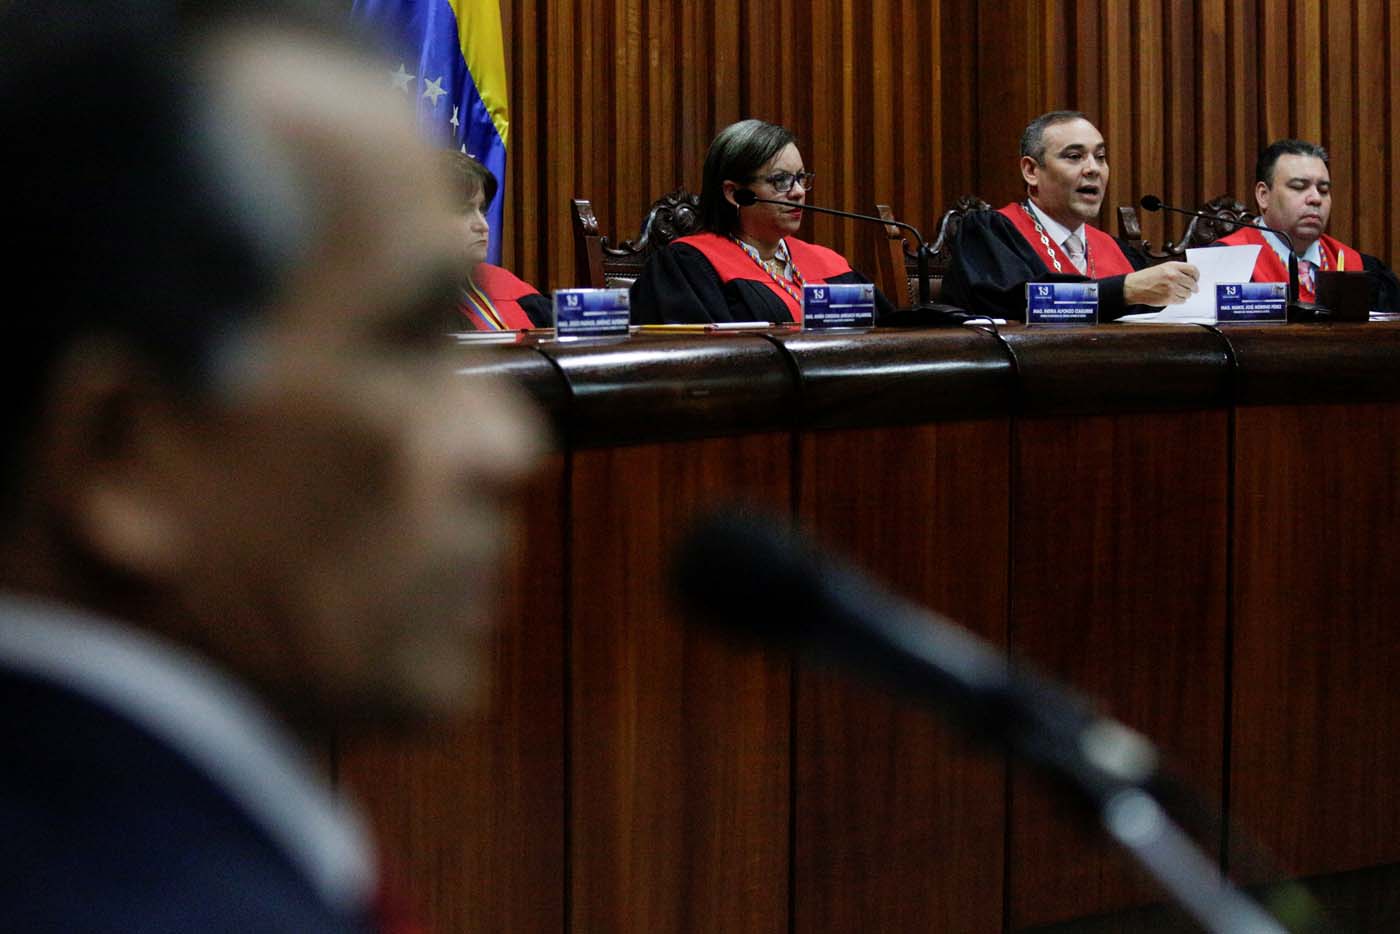 La justicia chavista estrecha el cerco sobre el Parlamento